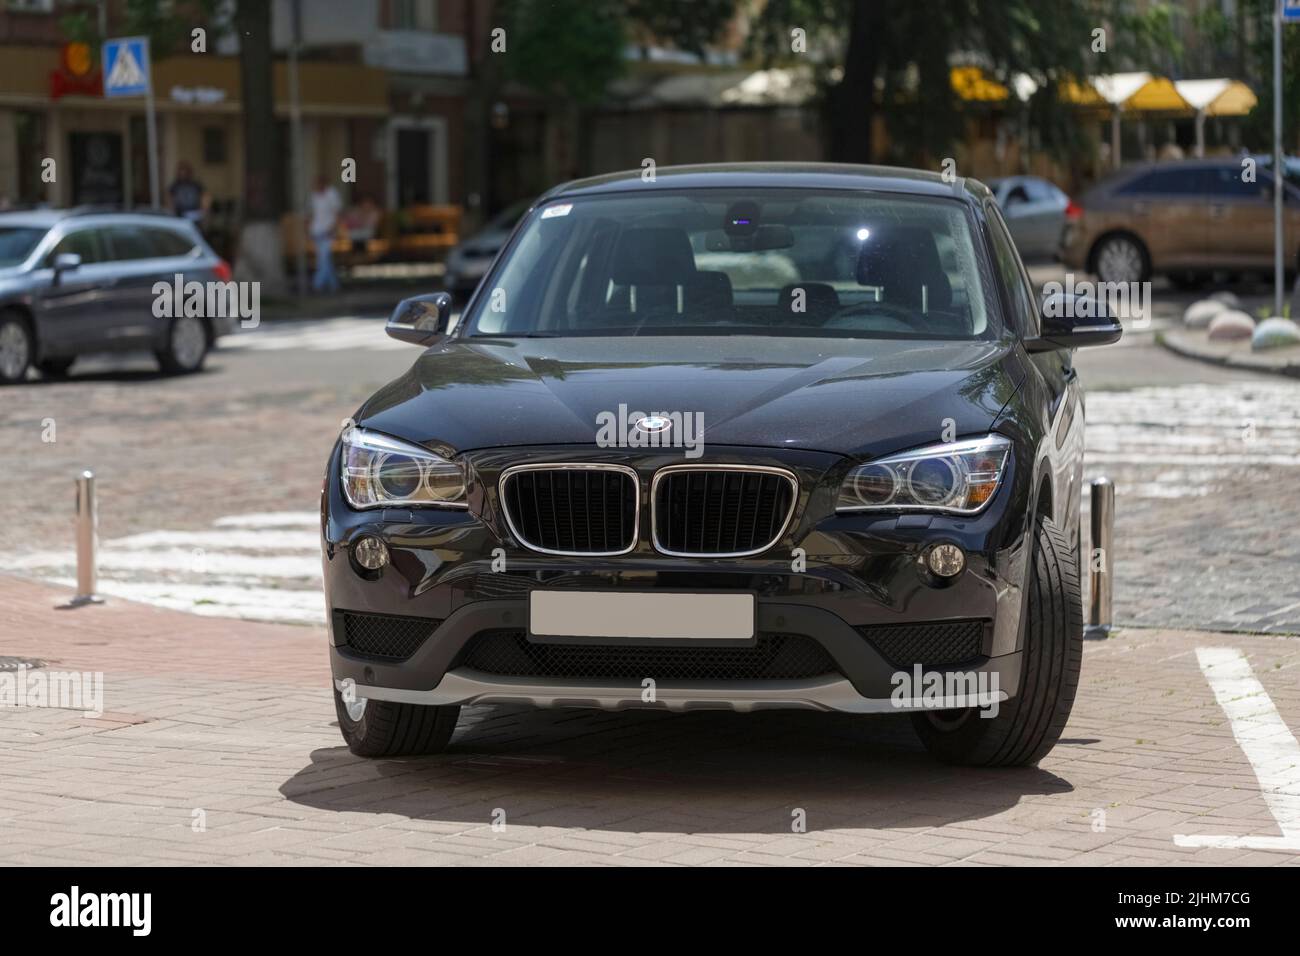 09.06.2020, Kyiv, Ukraine, BMW car on city street, close-up Stock Photo